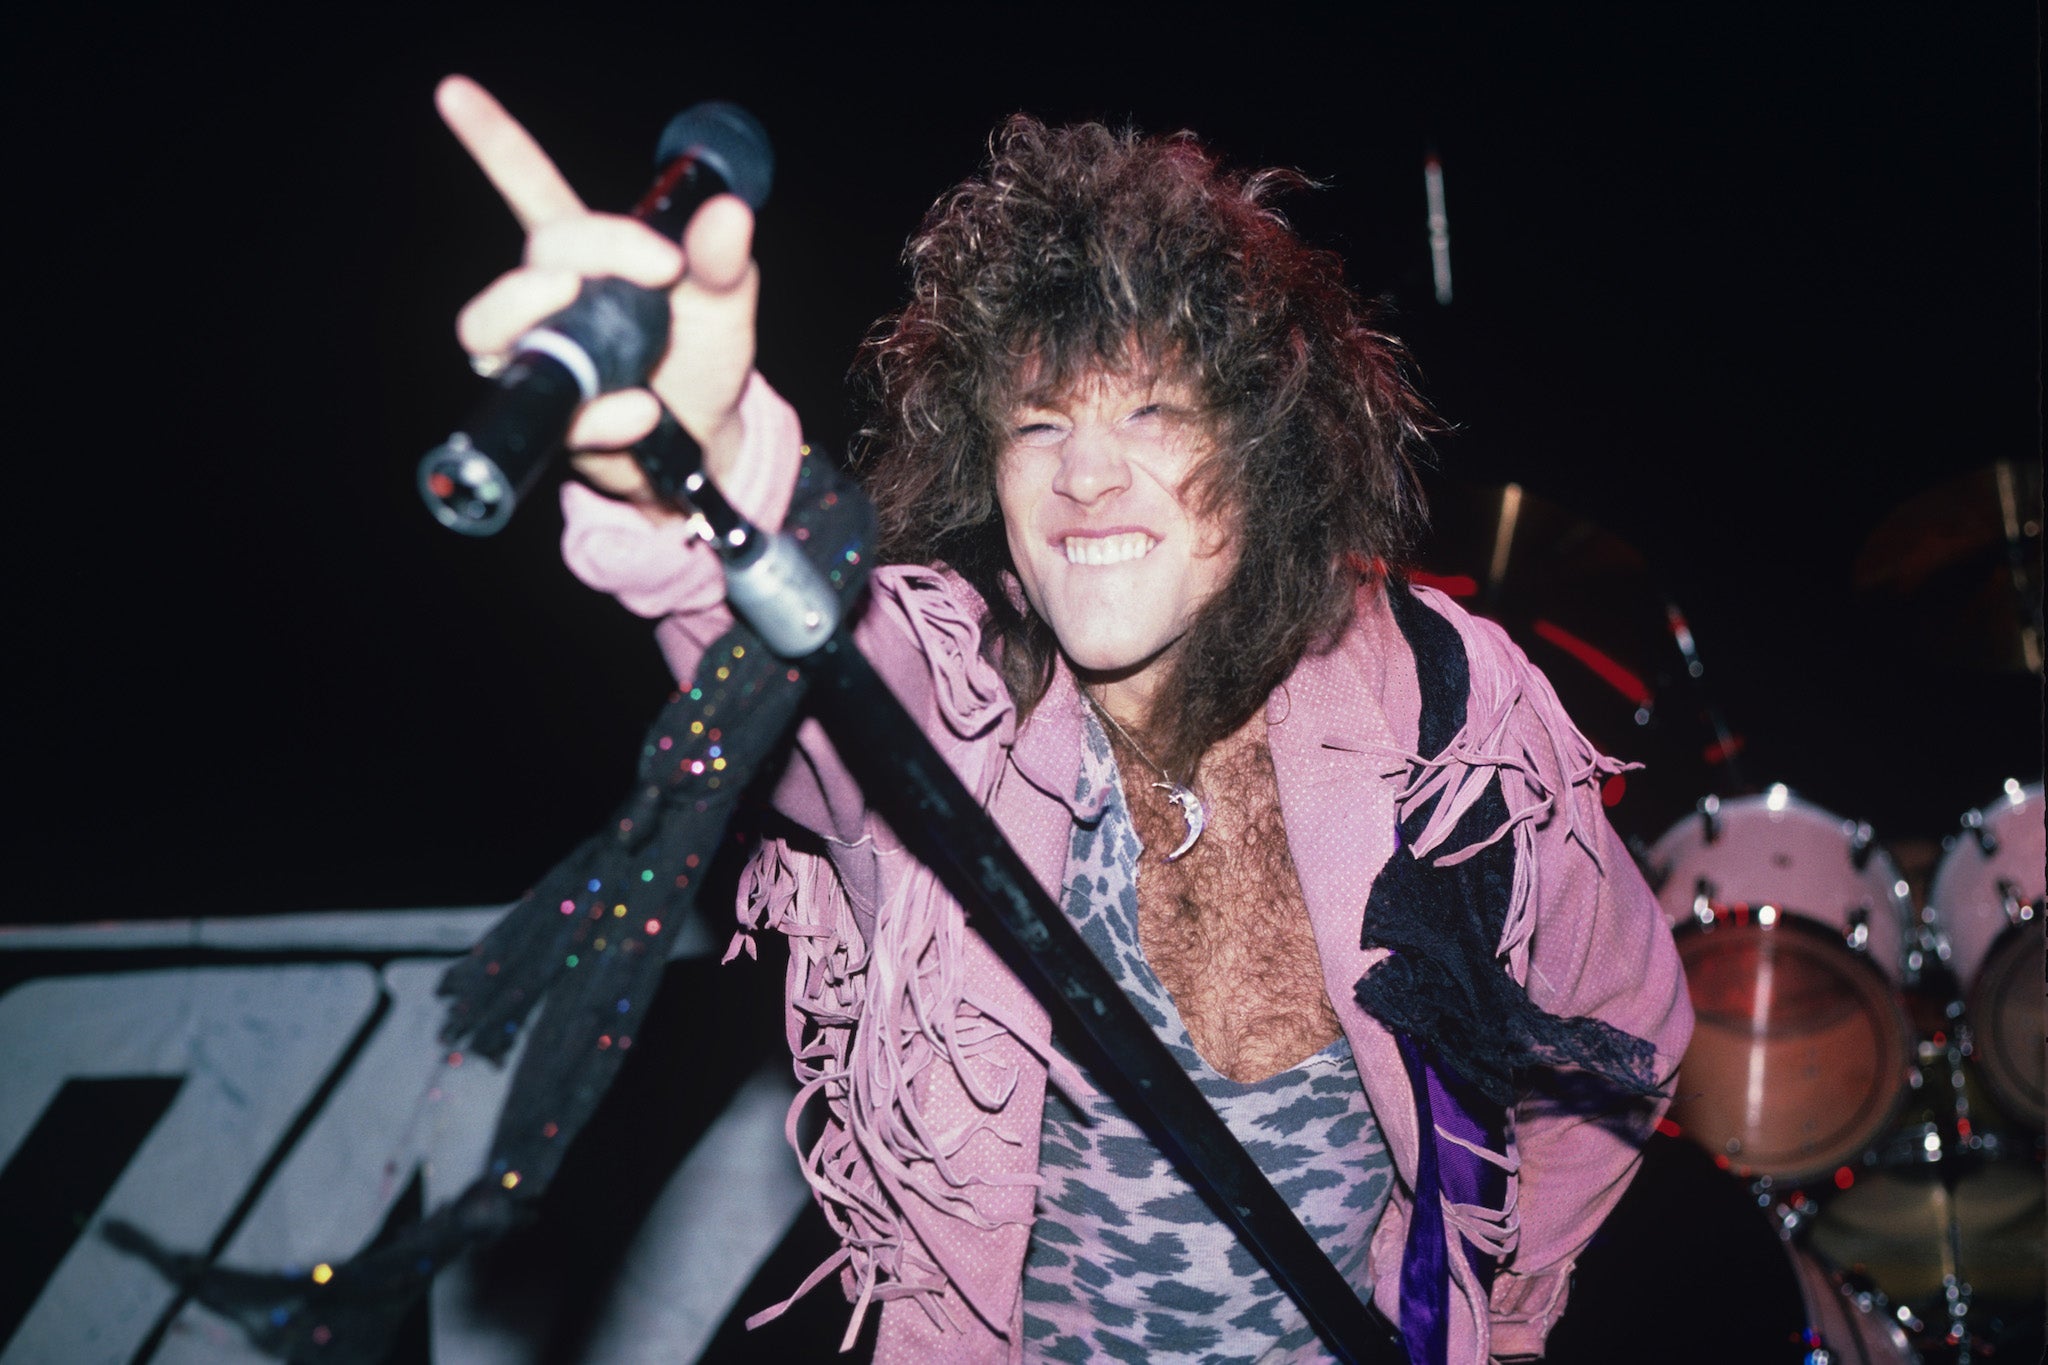 Rockstar life: Jon Bon Jovi pictured on stage circa 1985